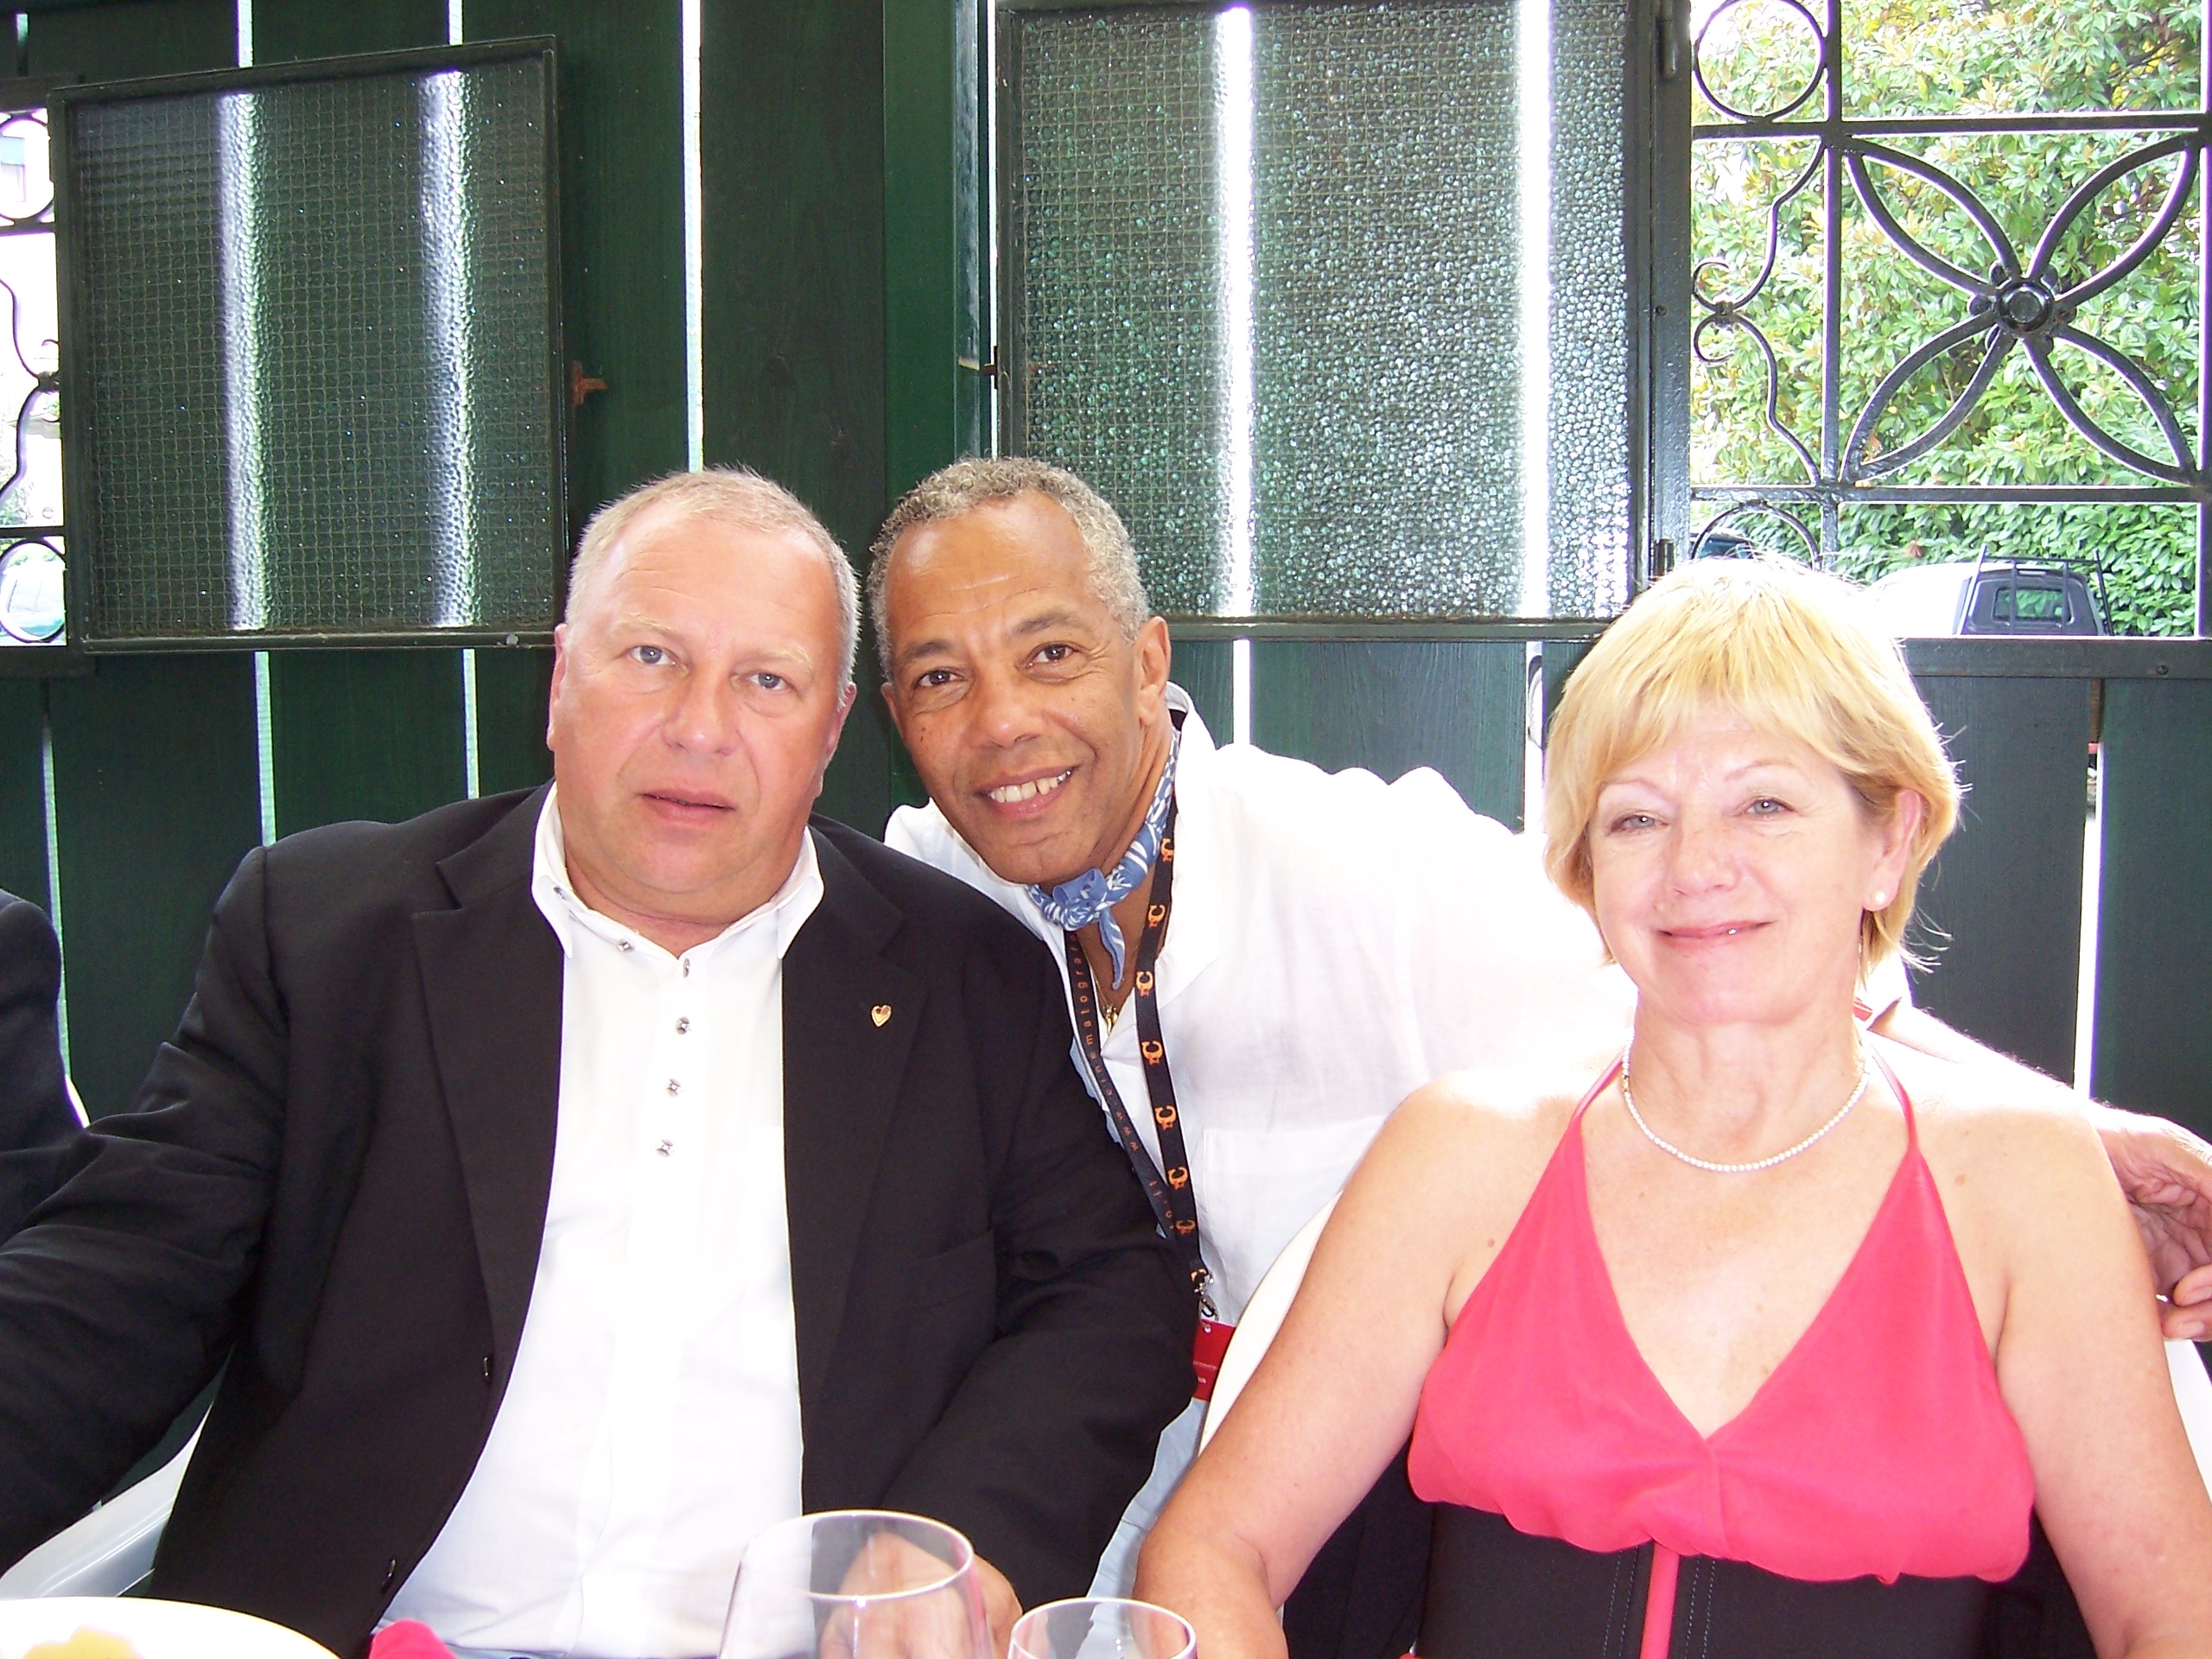 With Jerzy Stuhr and Mrs. Stuhr from the film Persona Non Grata, at the Venice Film Festival. 2005